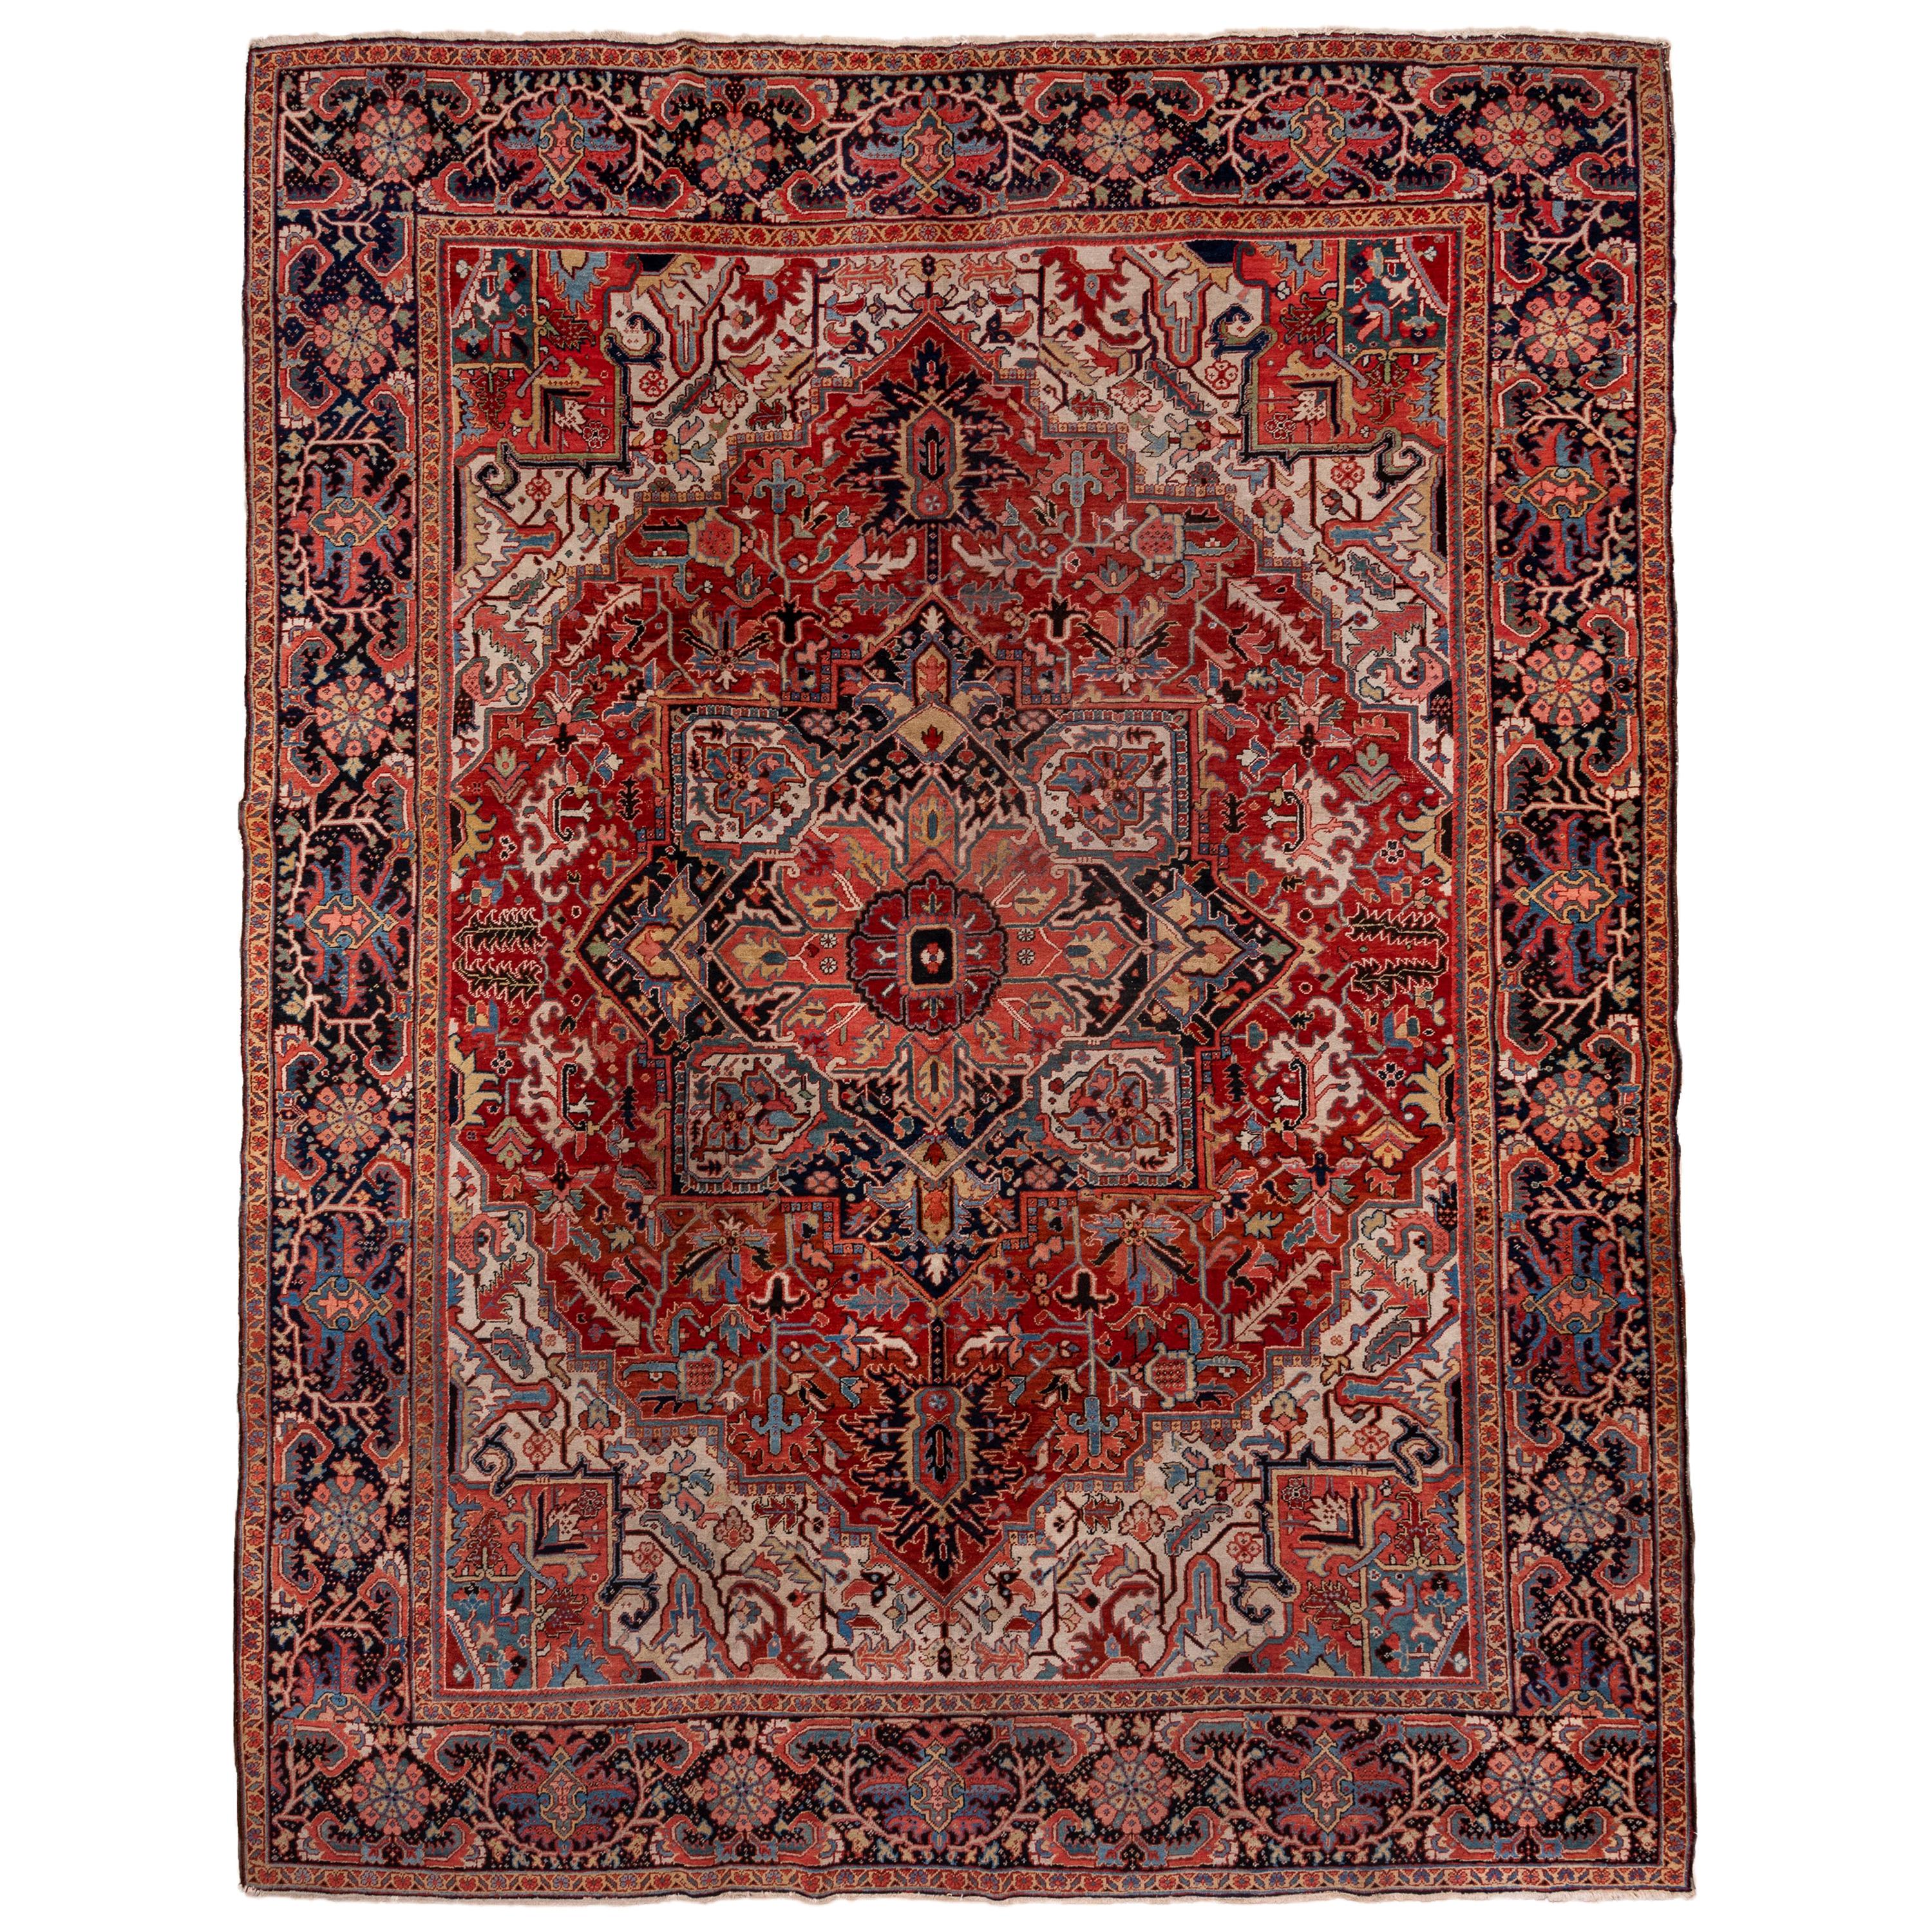 Bright Red Field Antique Persian Heriz Carpet